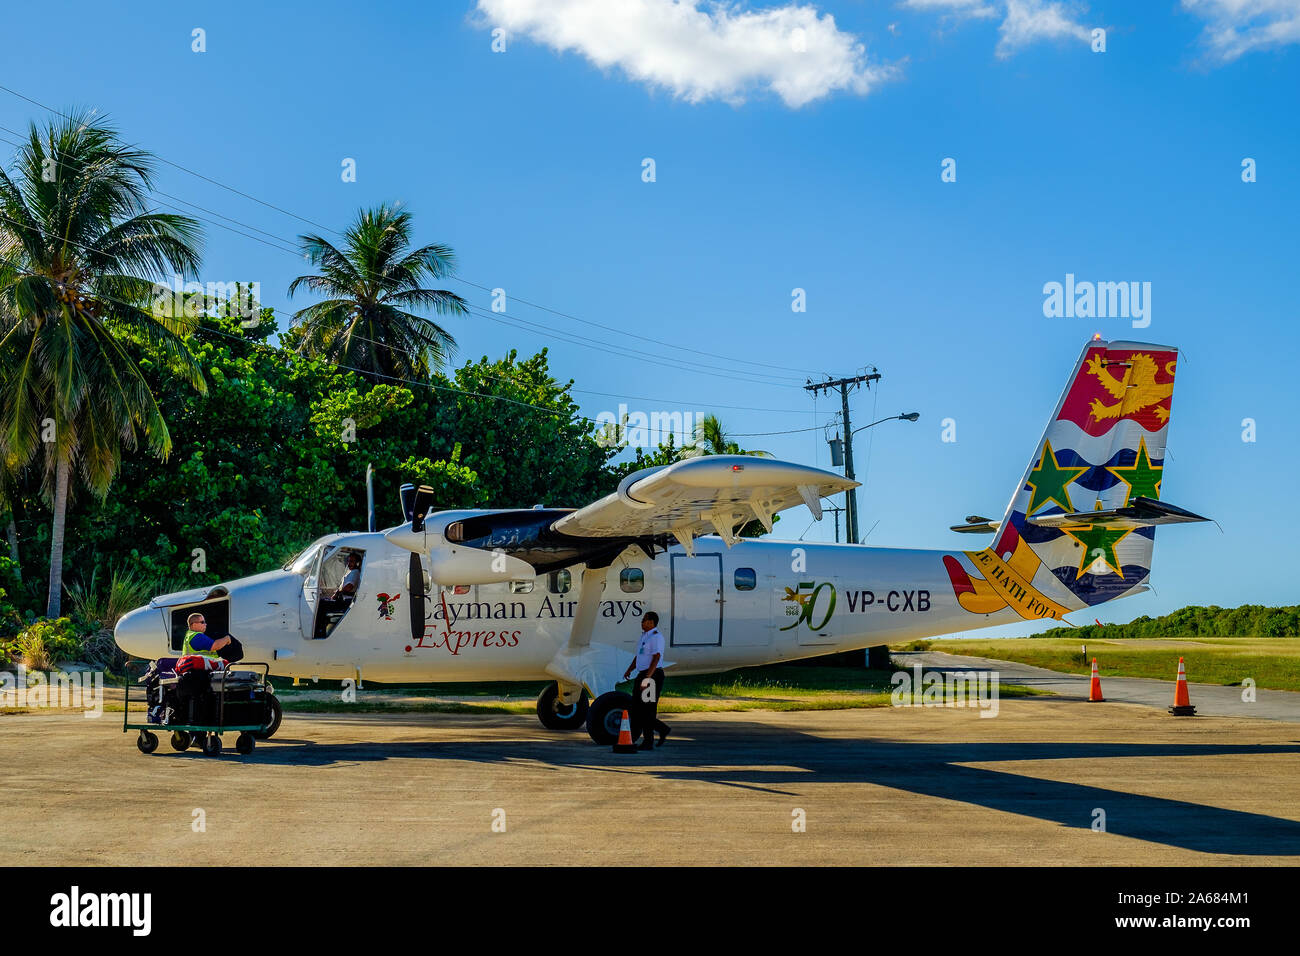 Little Cayman, Cayman Islands, Nov 2018, de Havilland Canada DHC-6 Flugzeug der Cayman Airways auf dem Asphalt des Edward Bodden Airfield Stockfoto